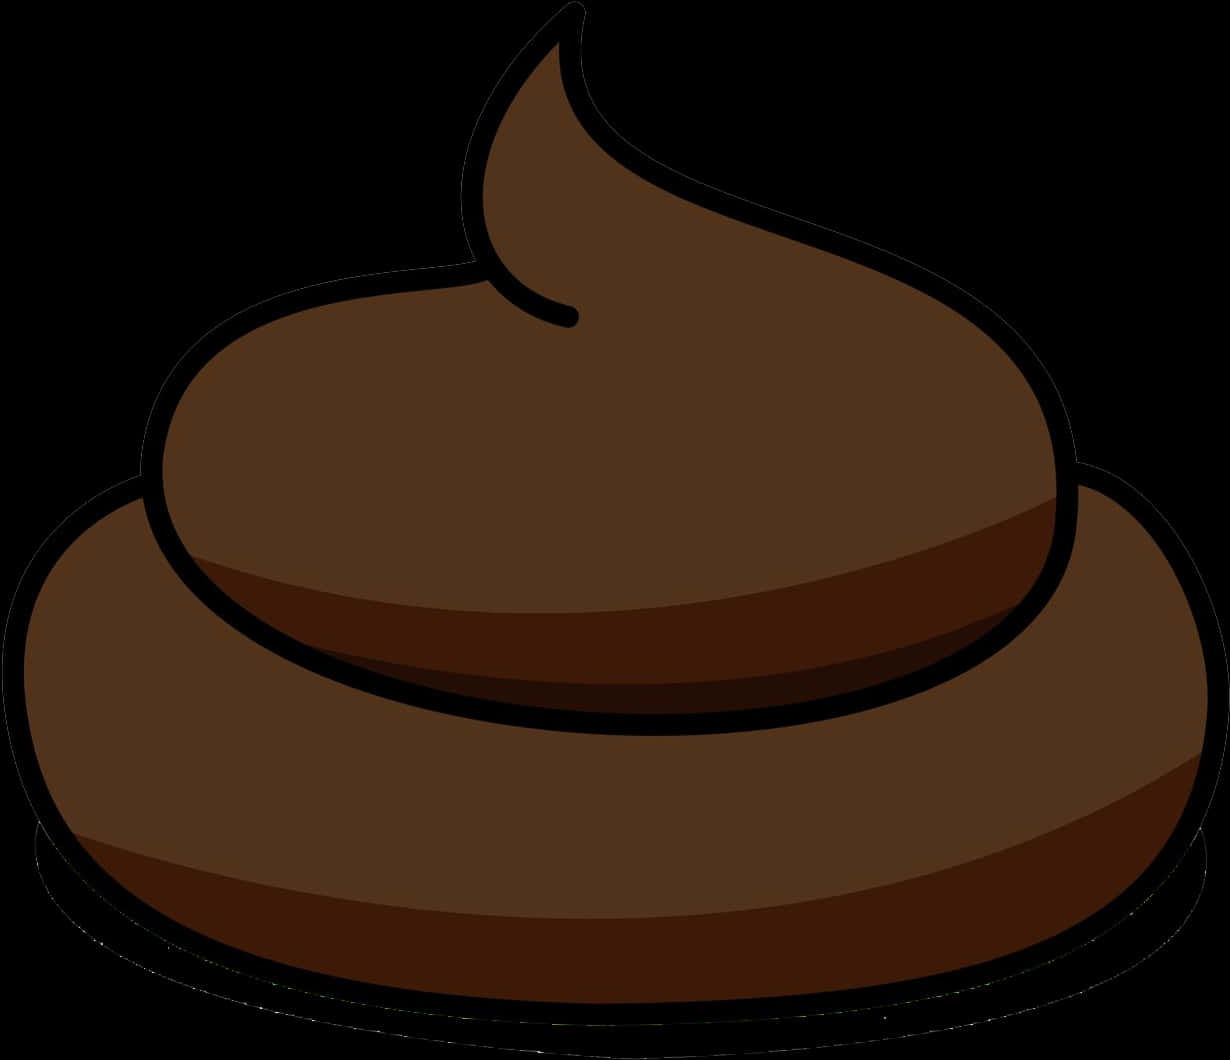 A Brown Poop On A Black Background